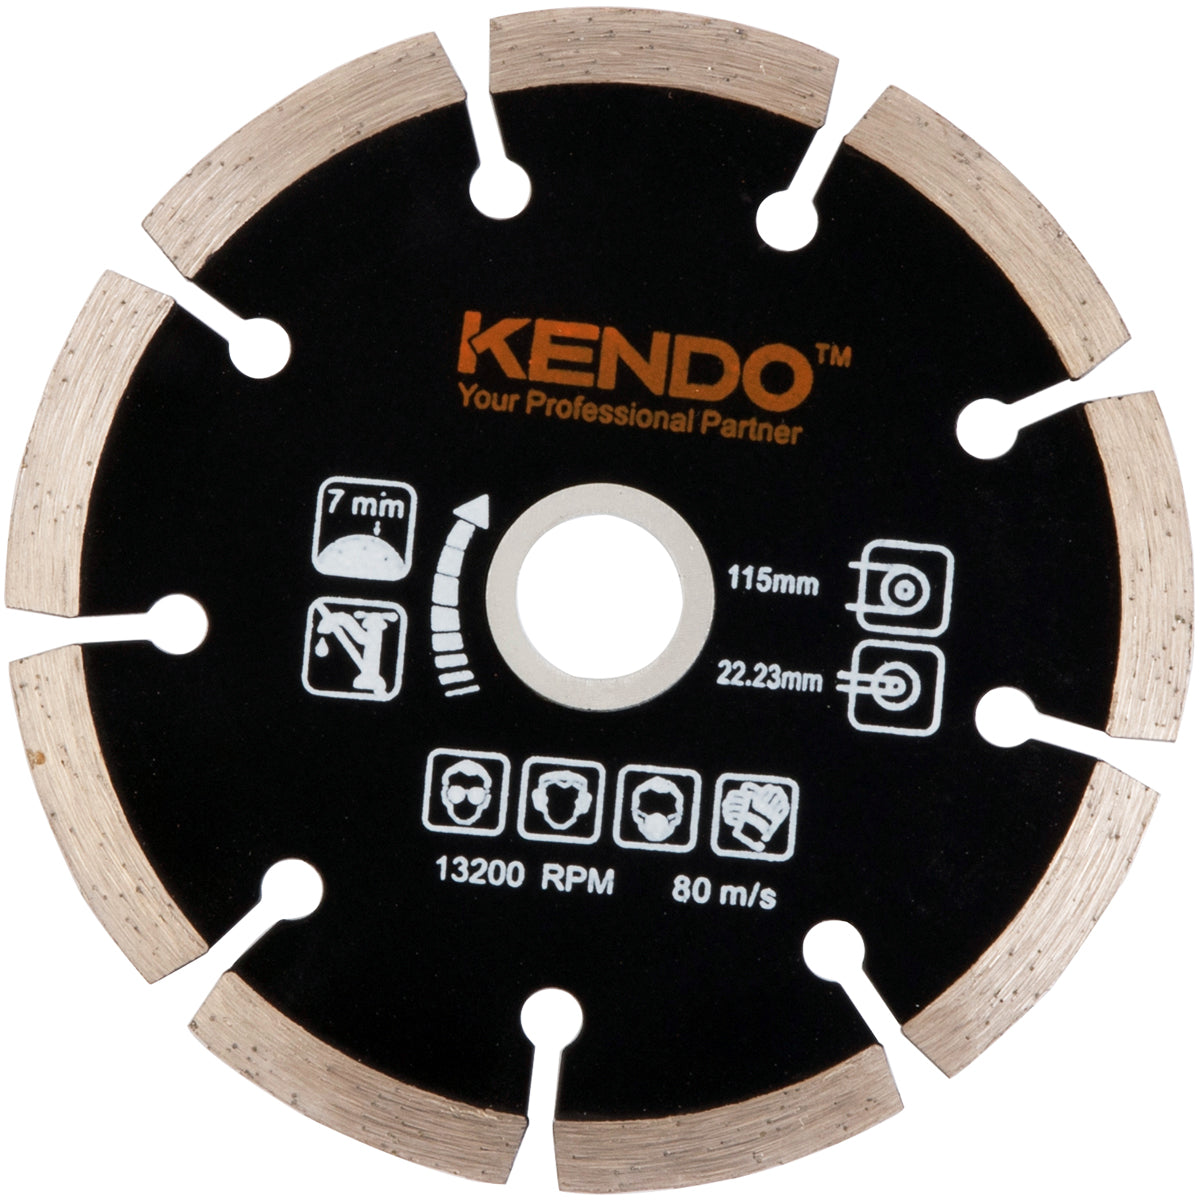 Kendo 115mm Diamond Cutting Blade Pack of 3